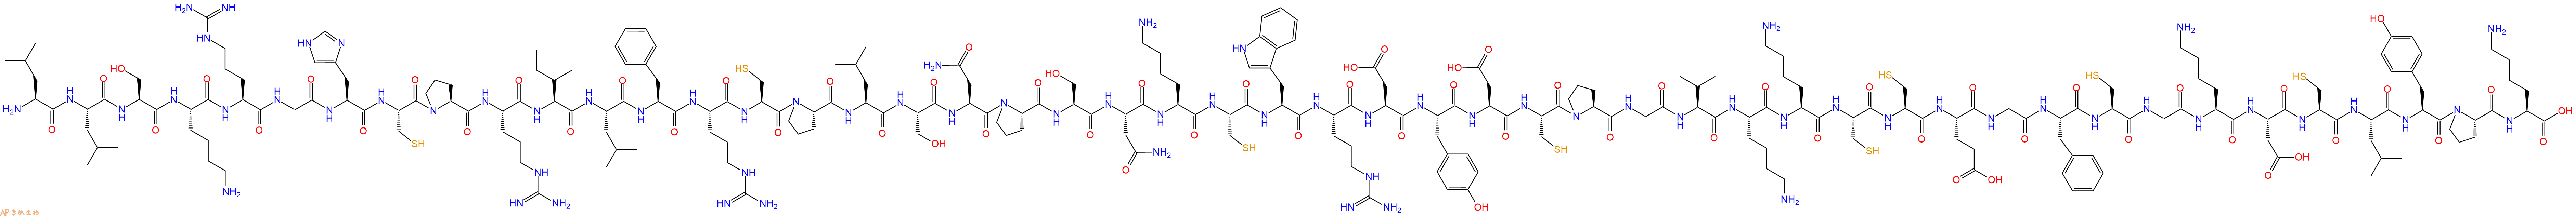 专肽生物产品SPAI-1, SodiumPotassiumATPase Inhibitor -1, porcin